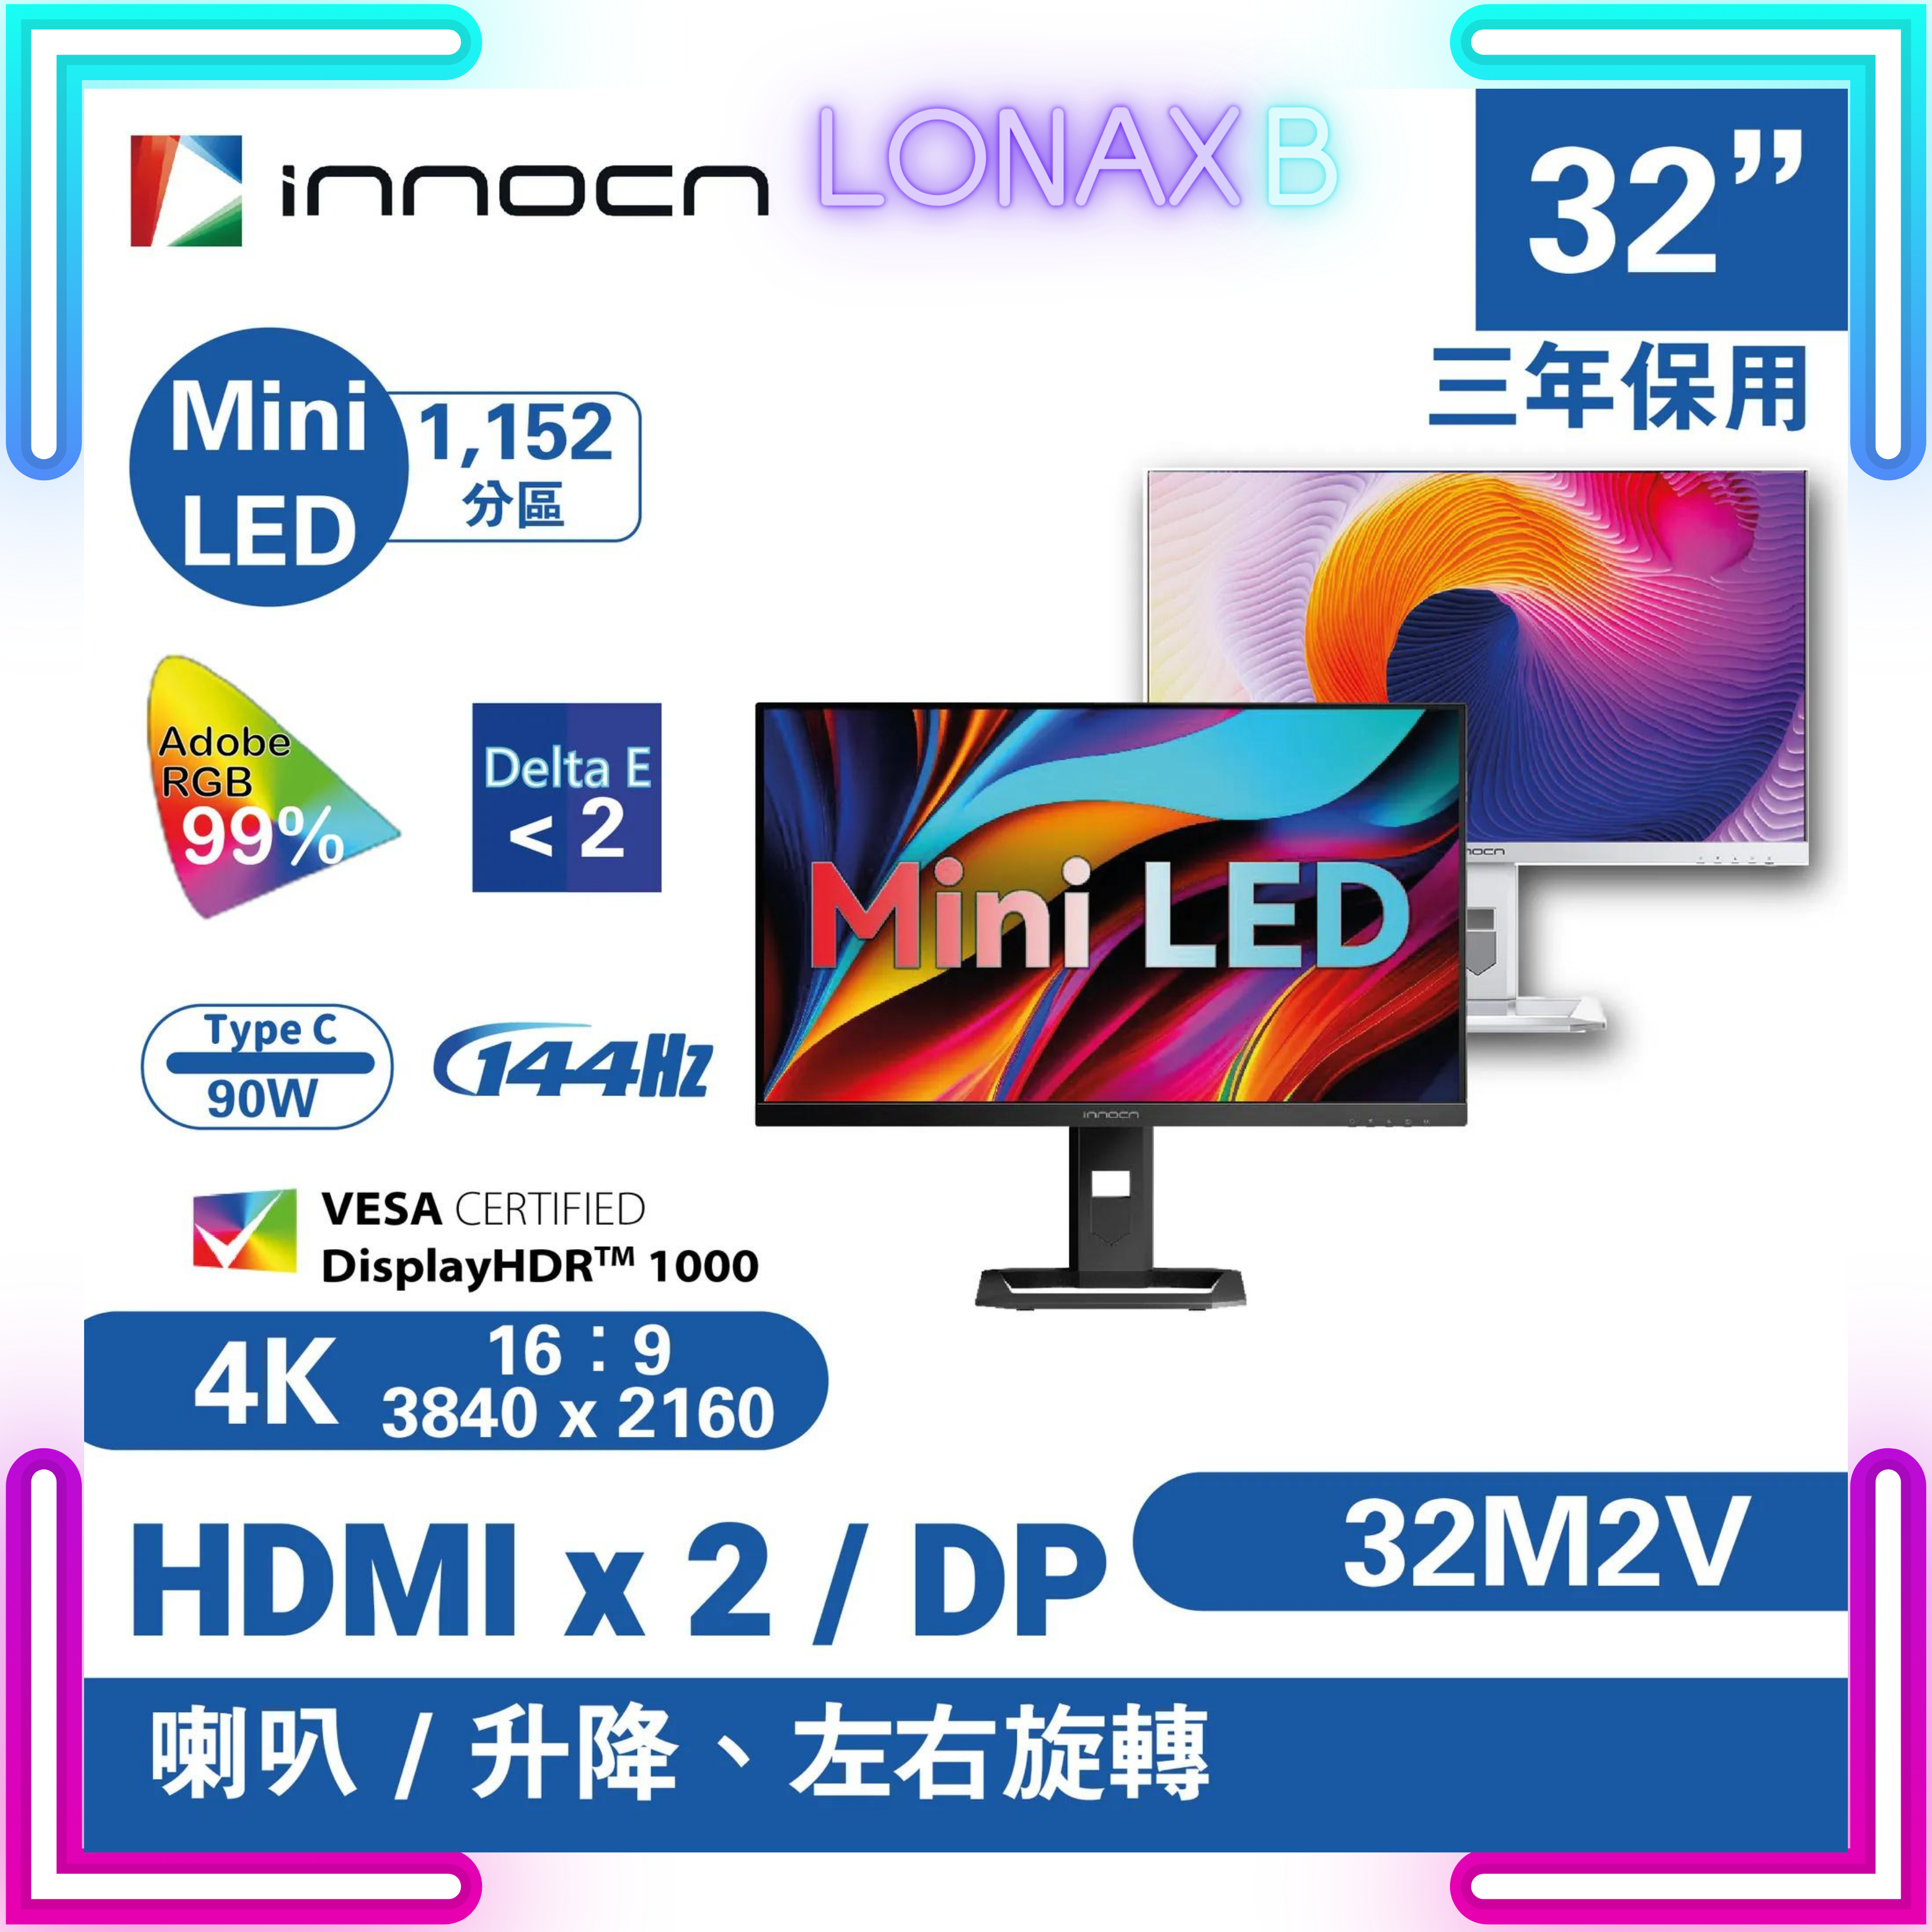 INNOCN 32M2V 專業顯示器 (32吋 / UHD / 144Hz / IPS / Mini LED / Type C / HDR1000) - 3840 x 2160  3年上門保養